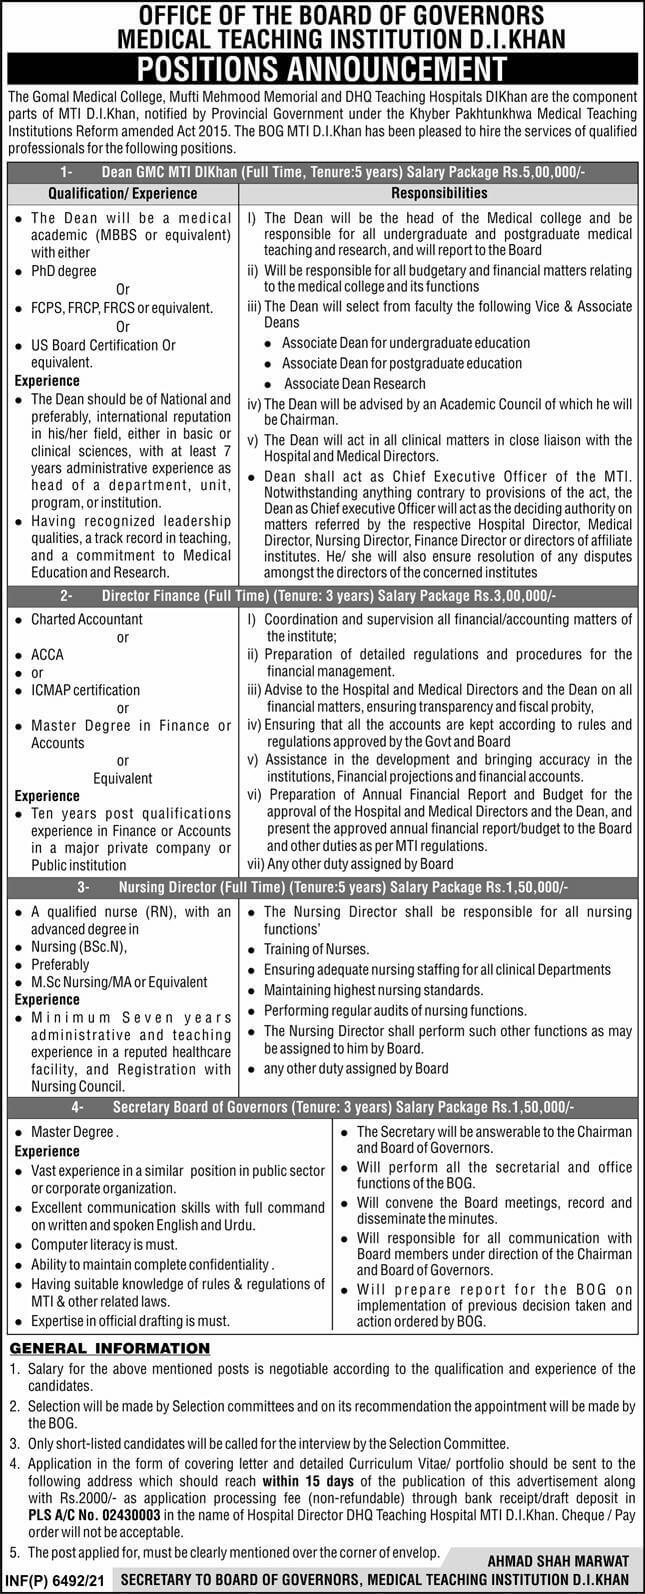 Medical Teaching Institution Jobs in DI Khan Dec 2021